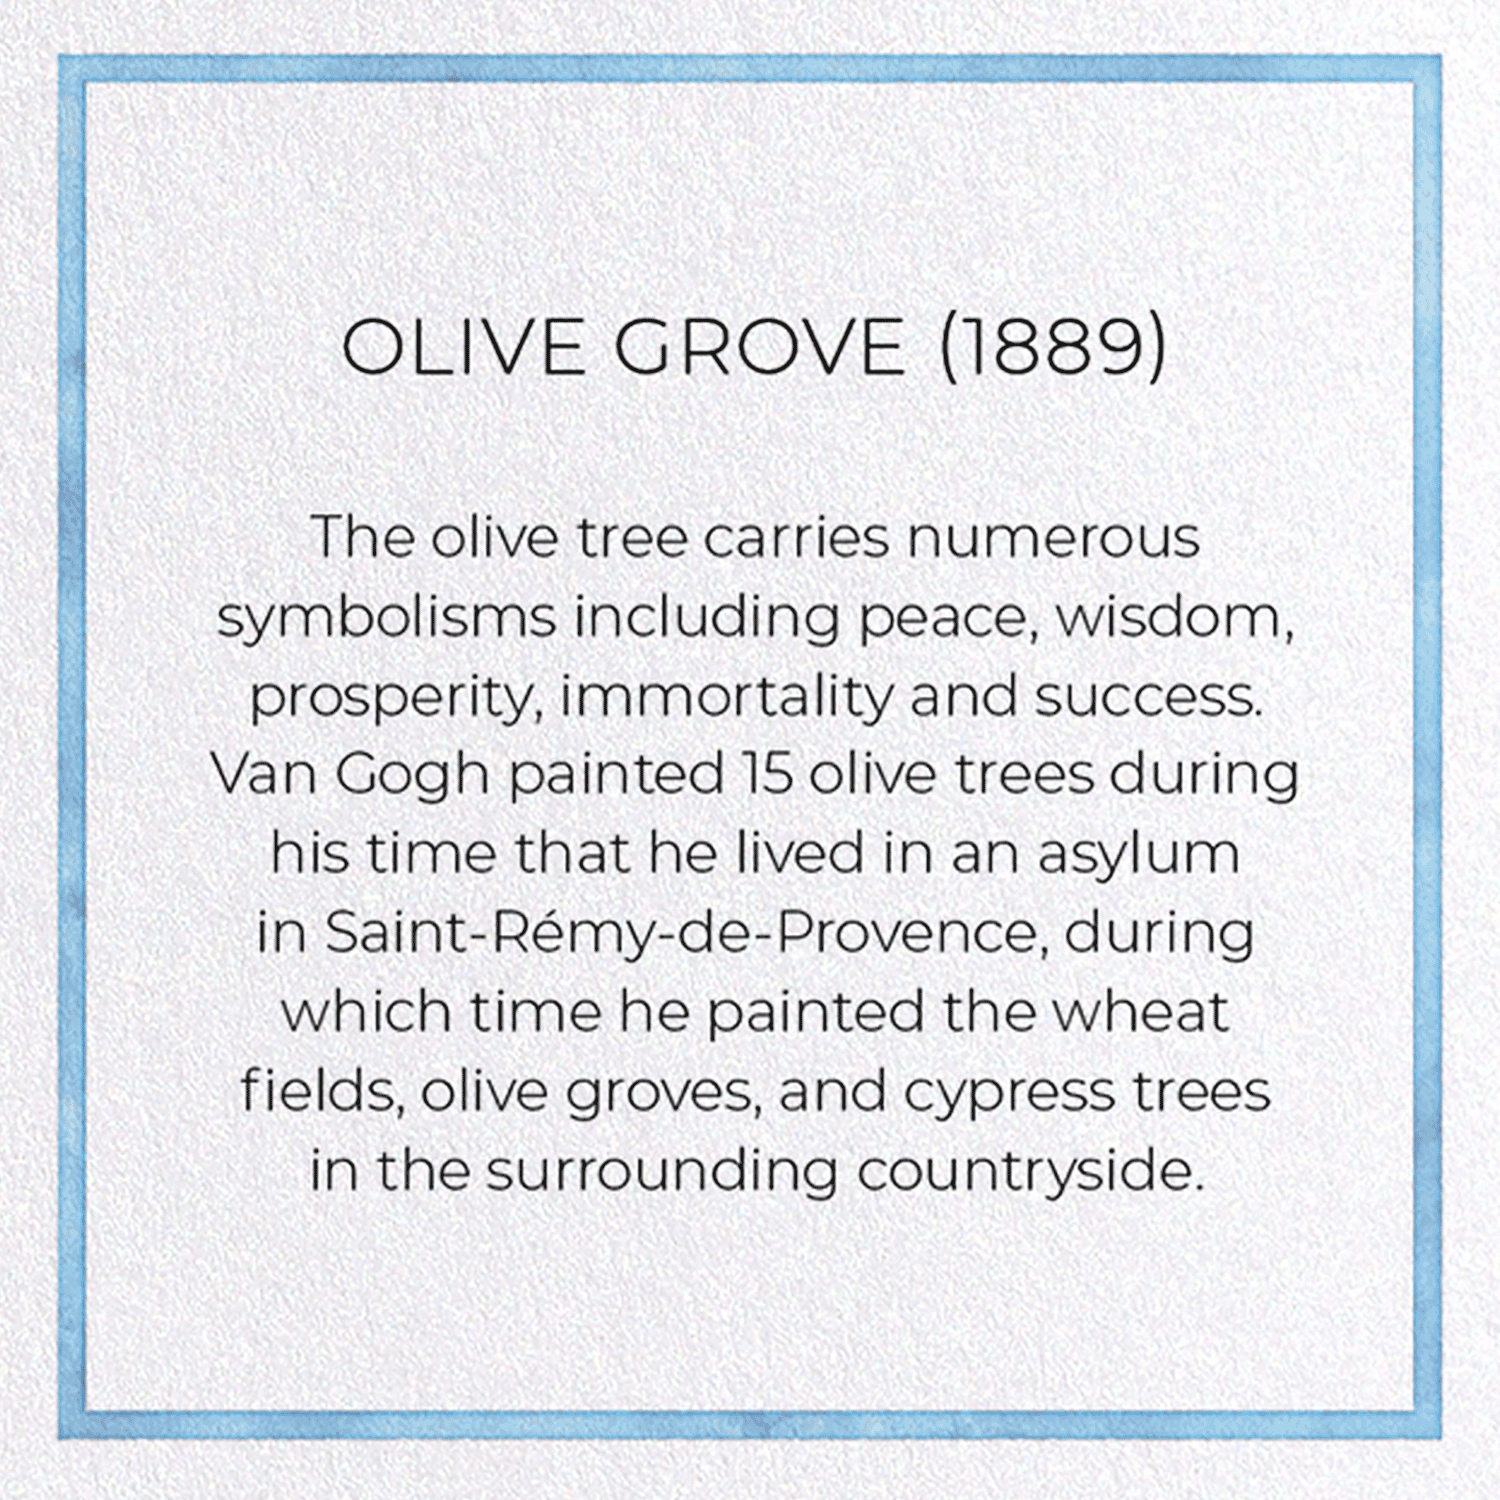 OLIVE GROVE (1889)